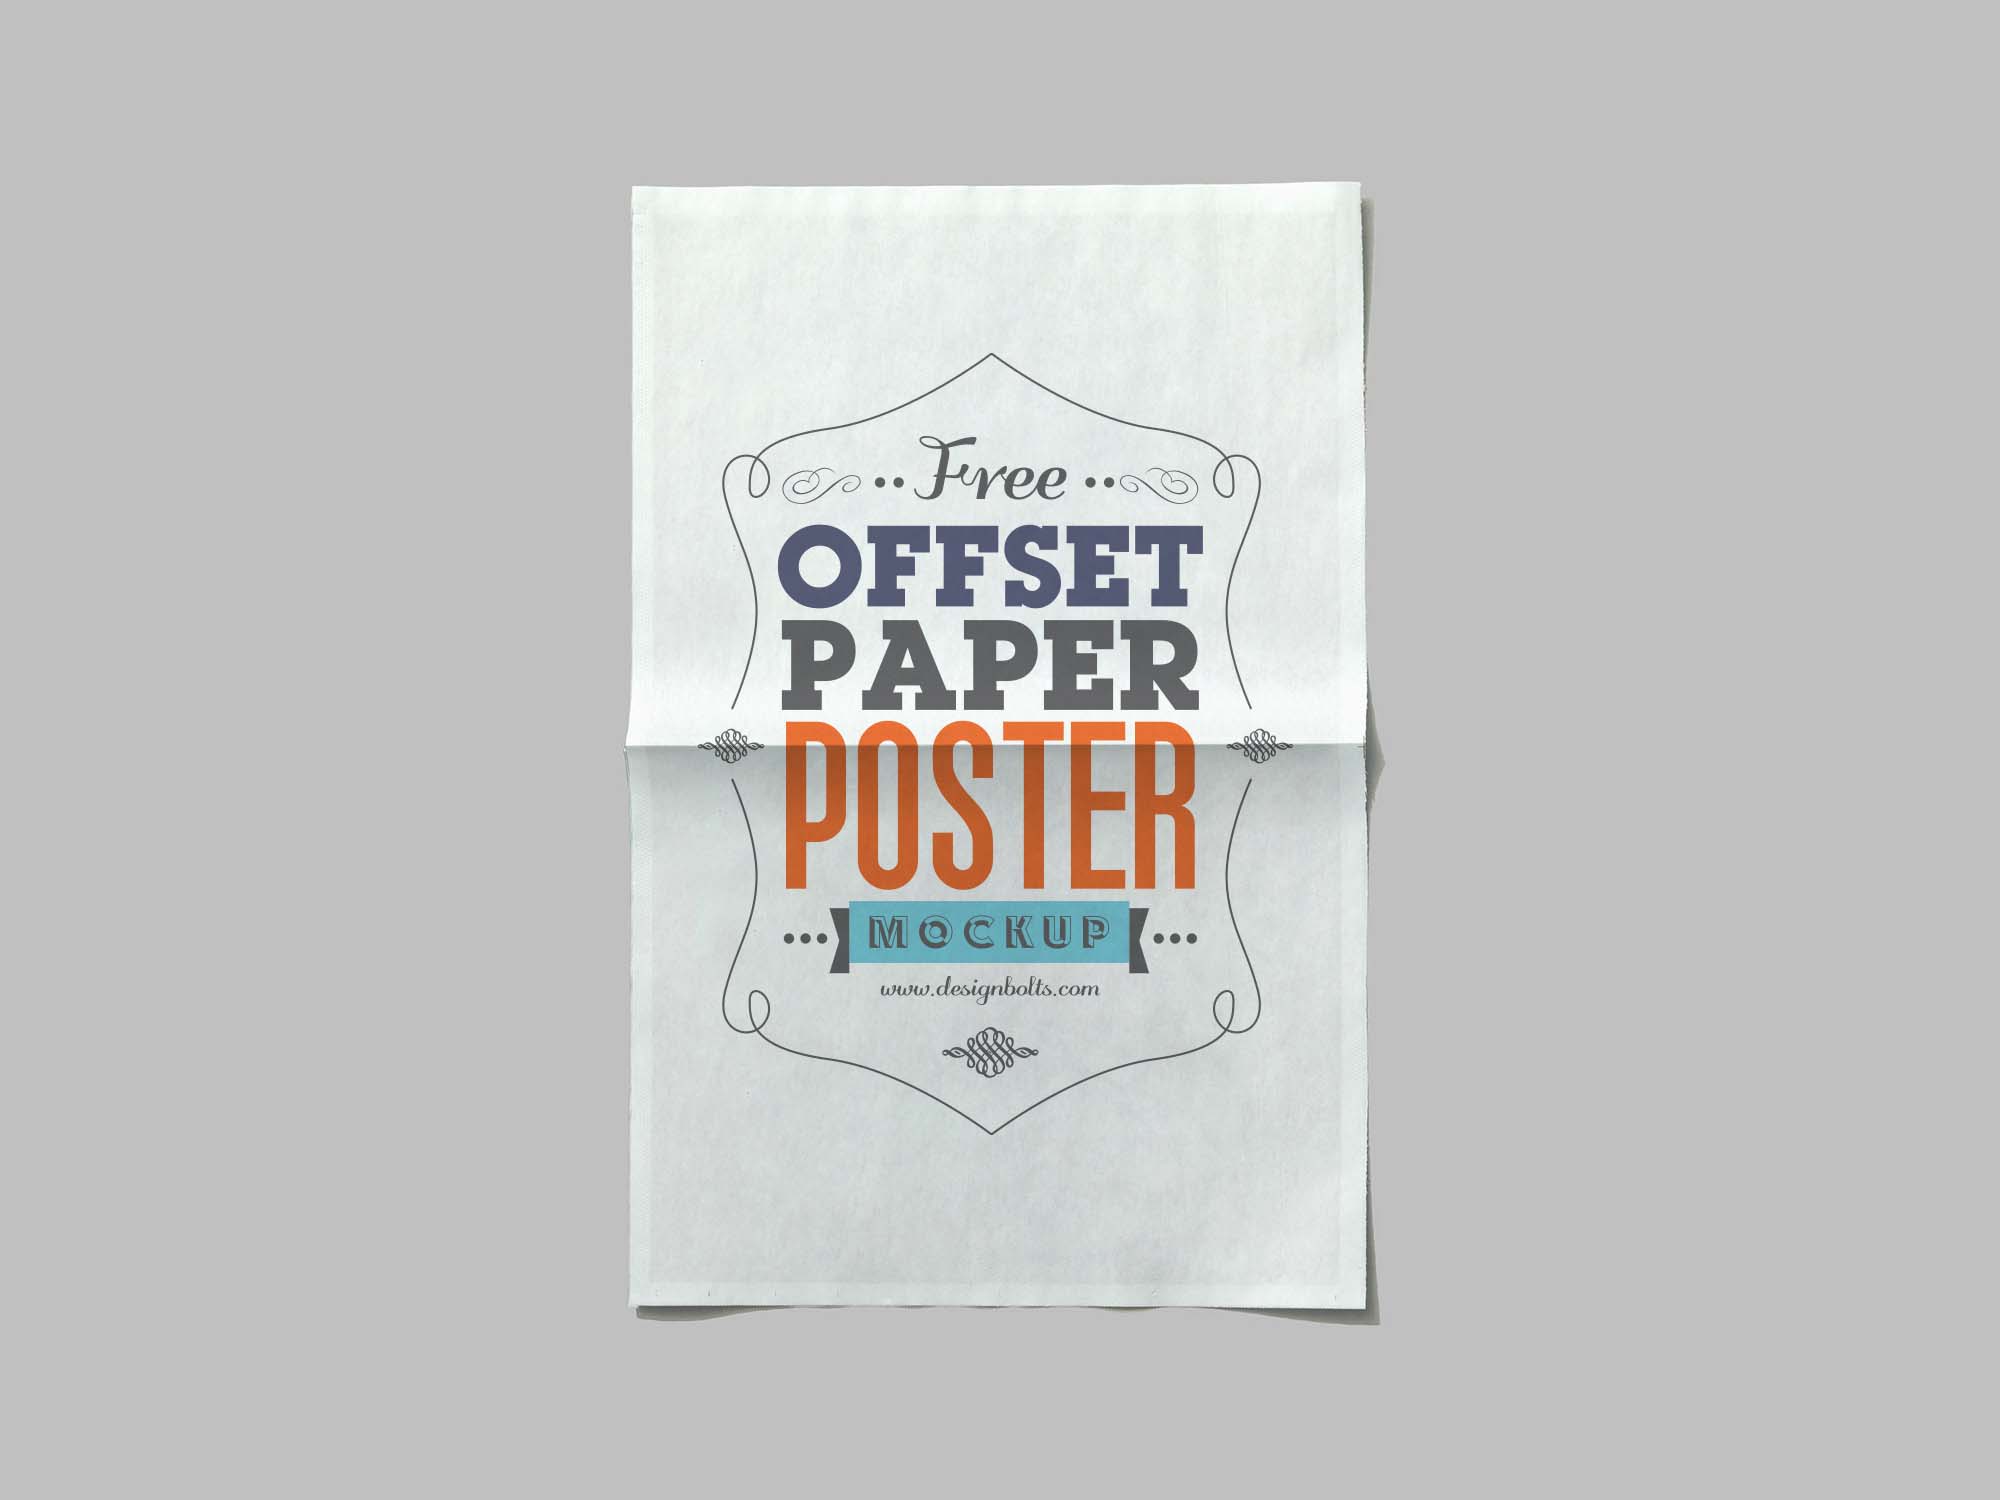 New Offset Paper Poster Mockup